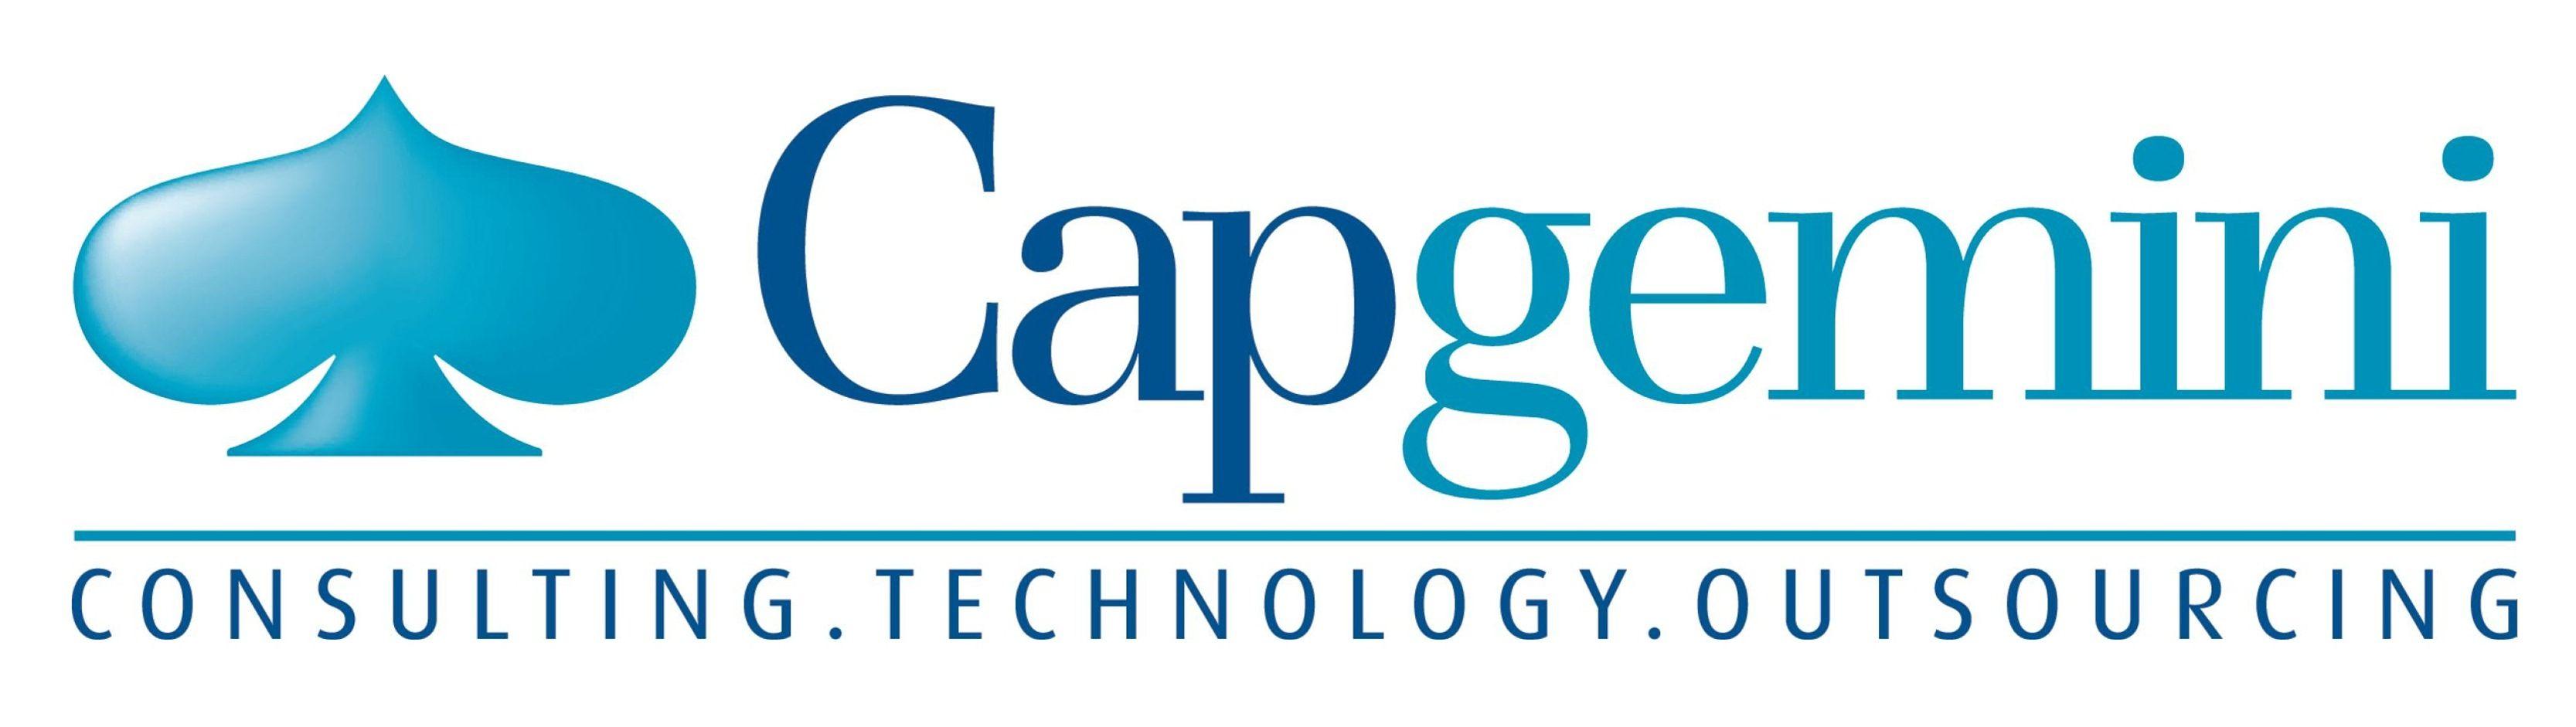 Capgemini Logo - Capgemini Logo